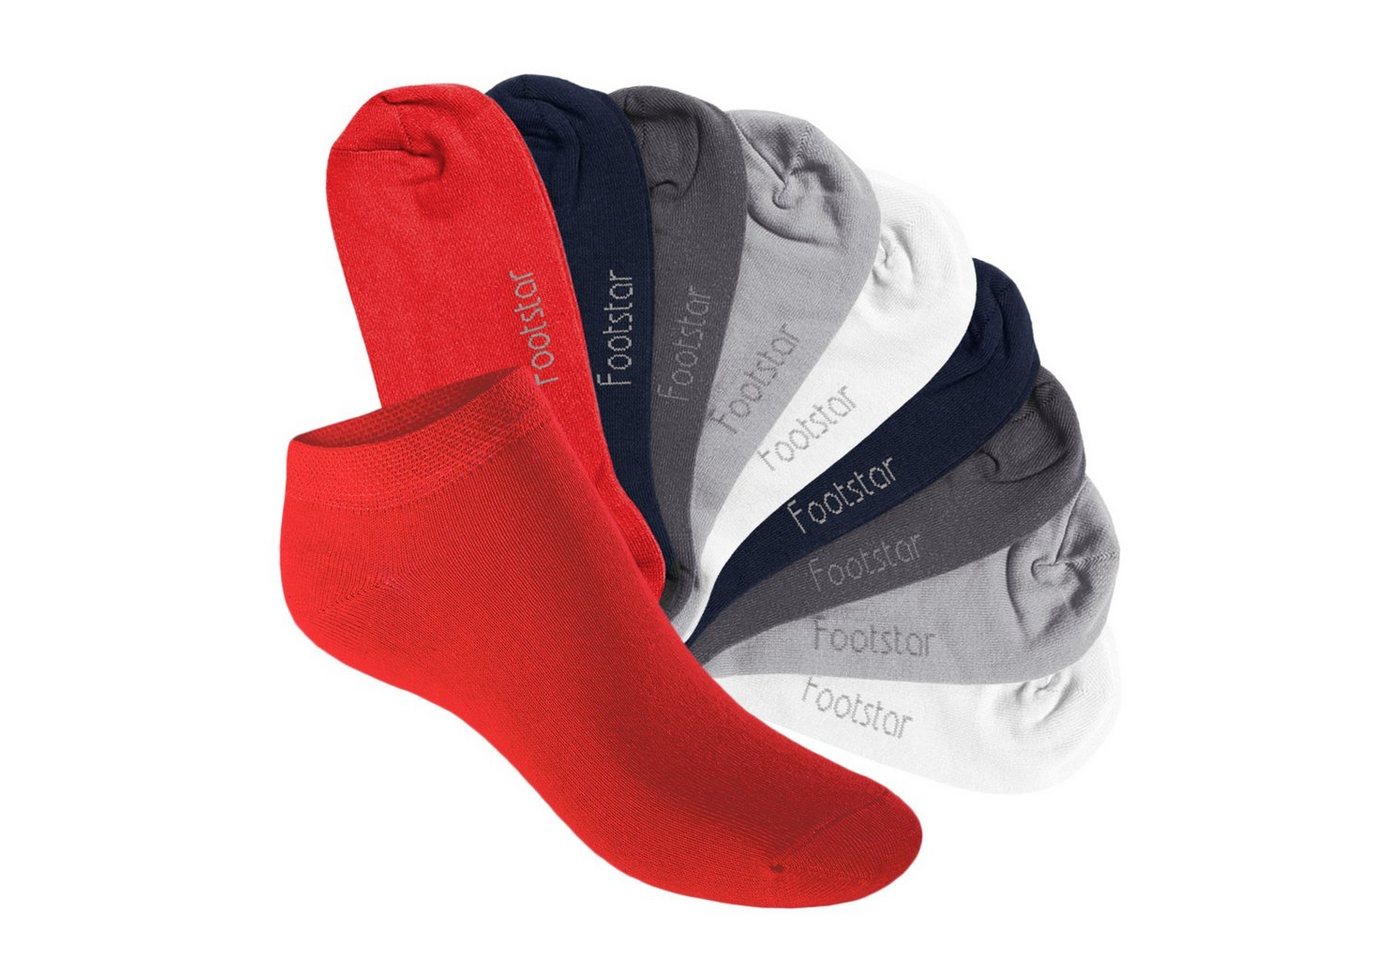 Footstar Kurzsocken Kinder Sneaker Socken (10 Paar) - Kurze Socken für Kids von Footstar